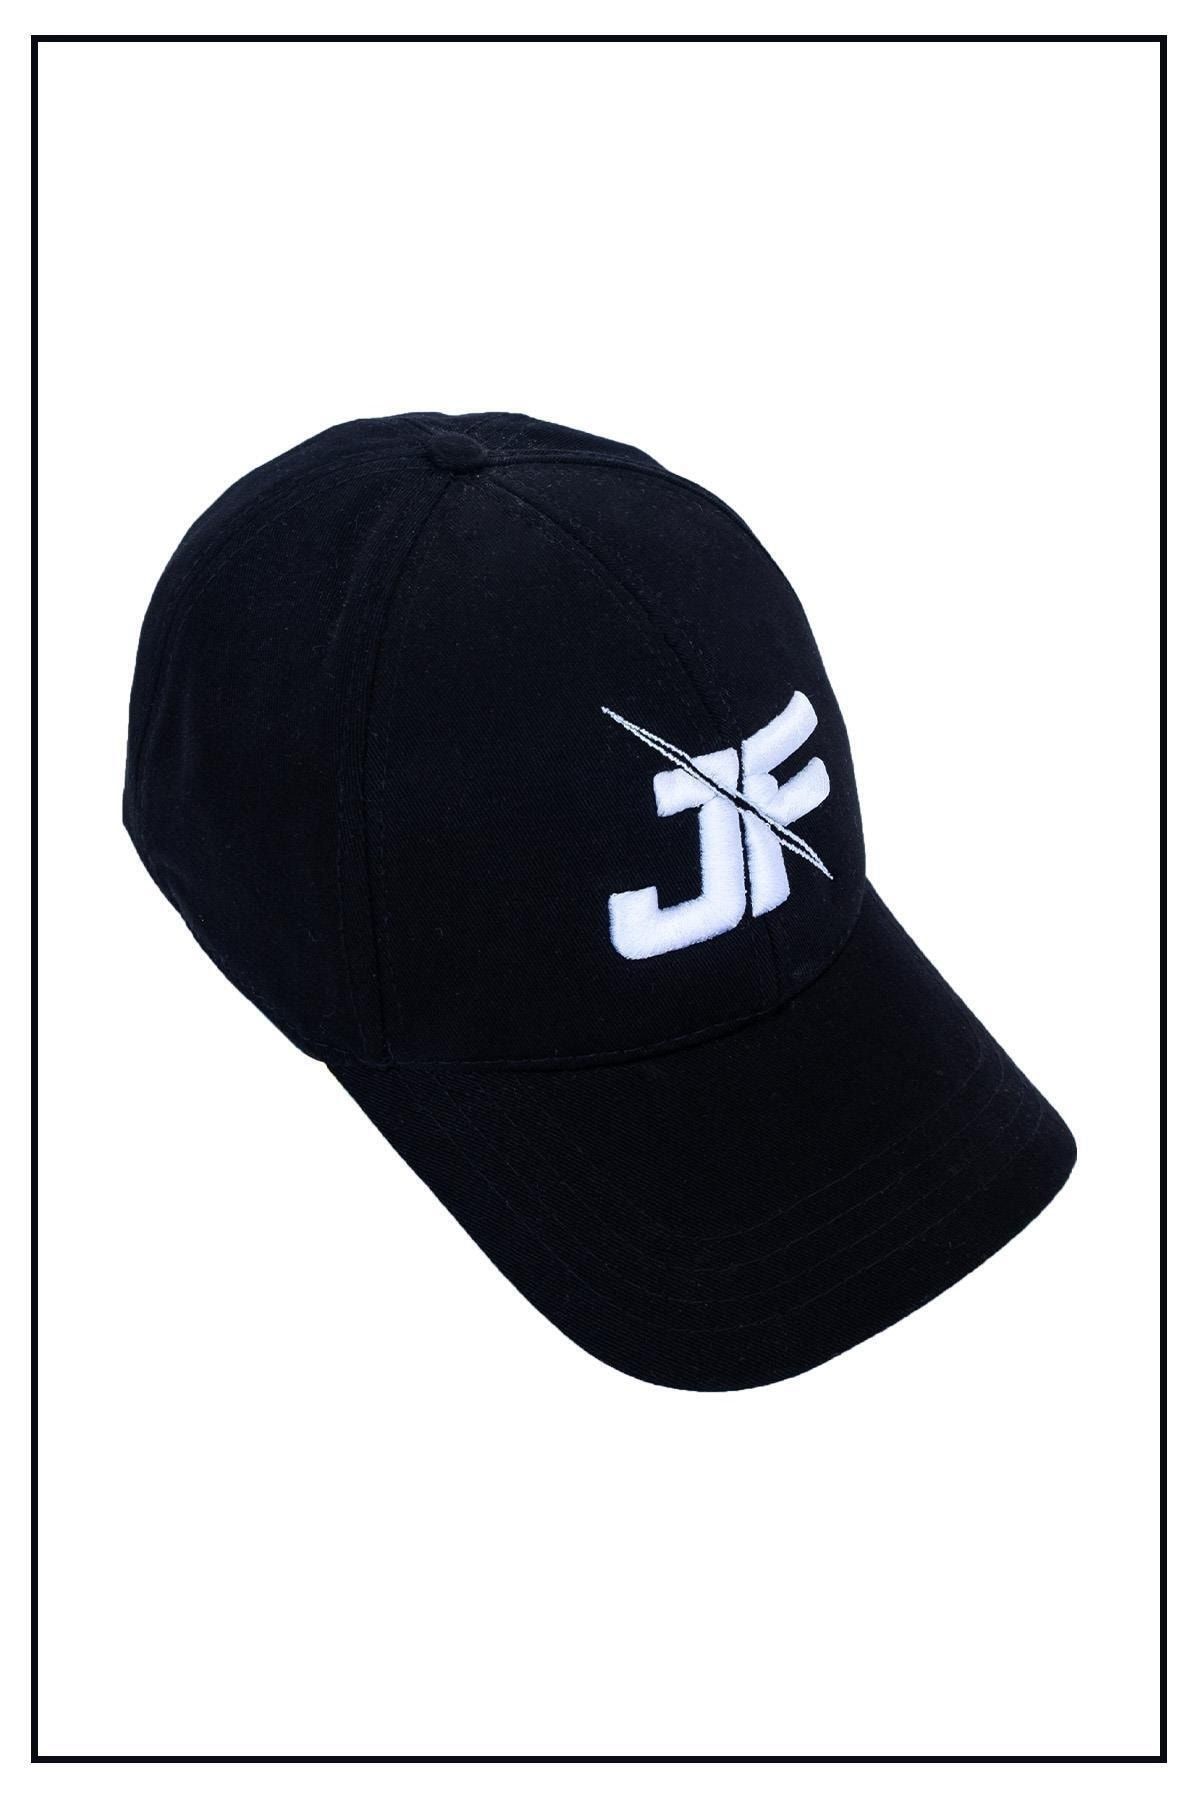 jofit Premium Sports Şapka Siyah-Beyaz